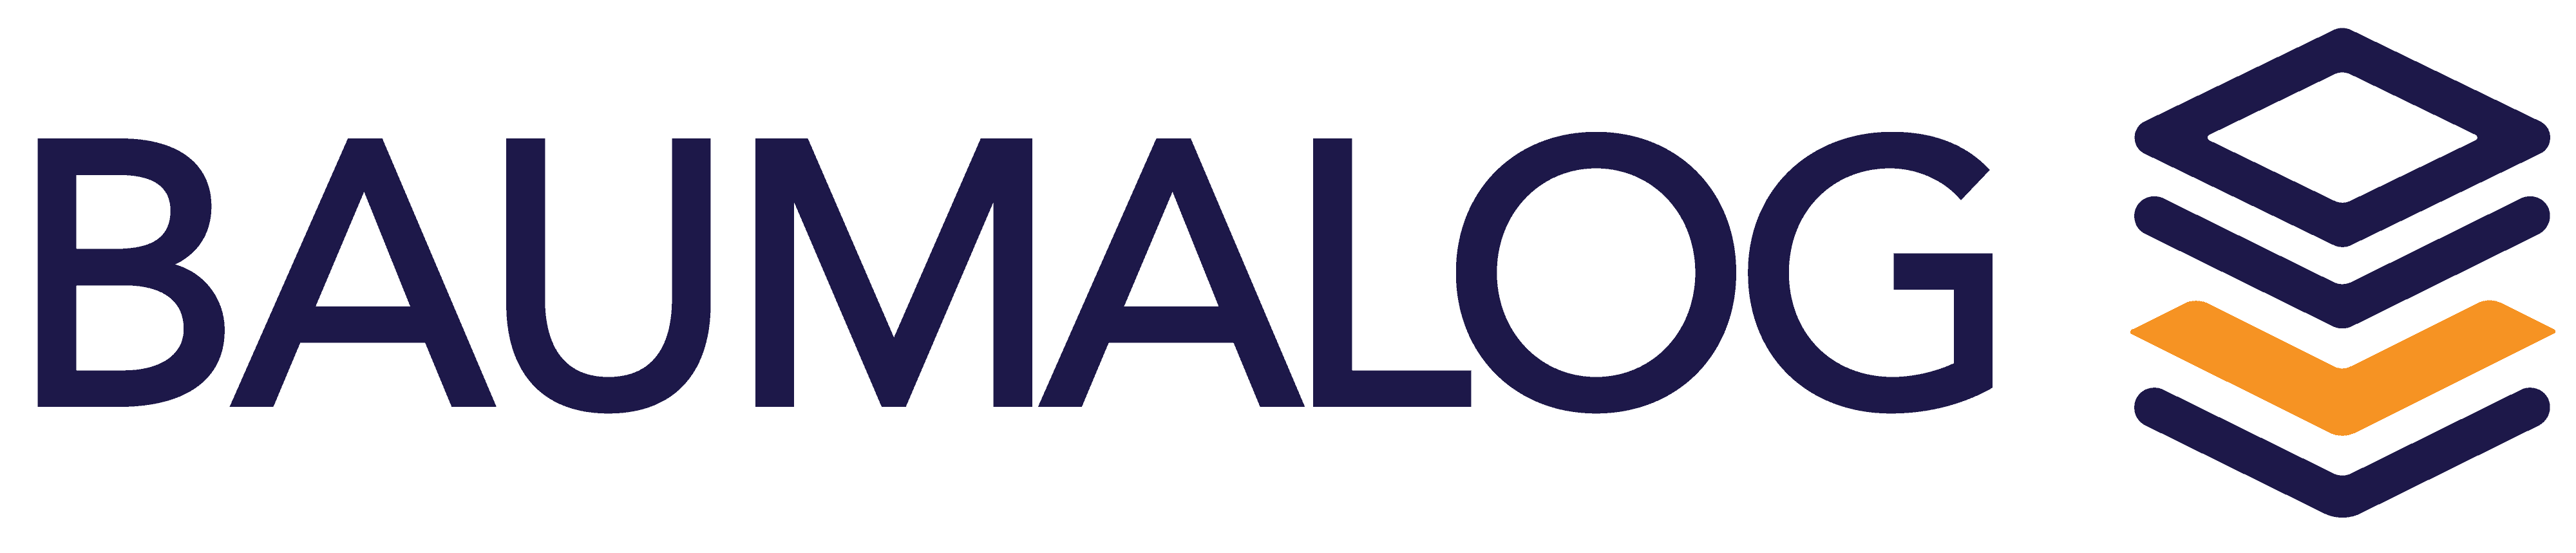 Baumalog - new logo